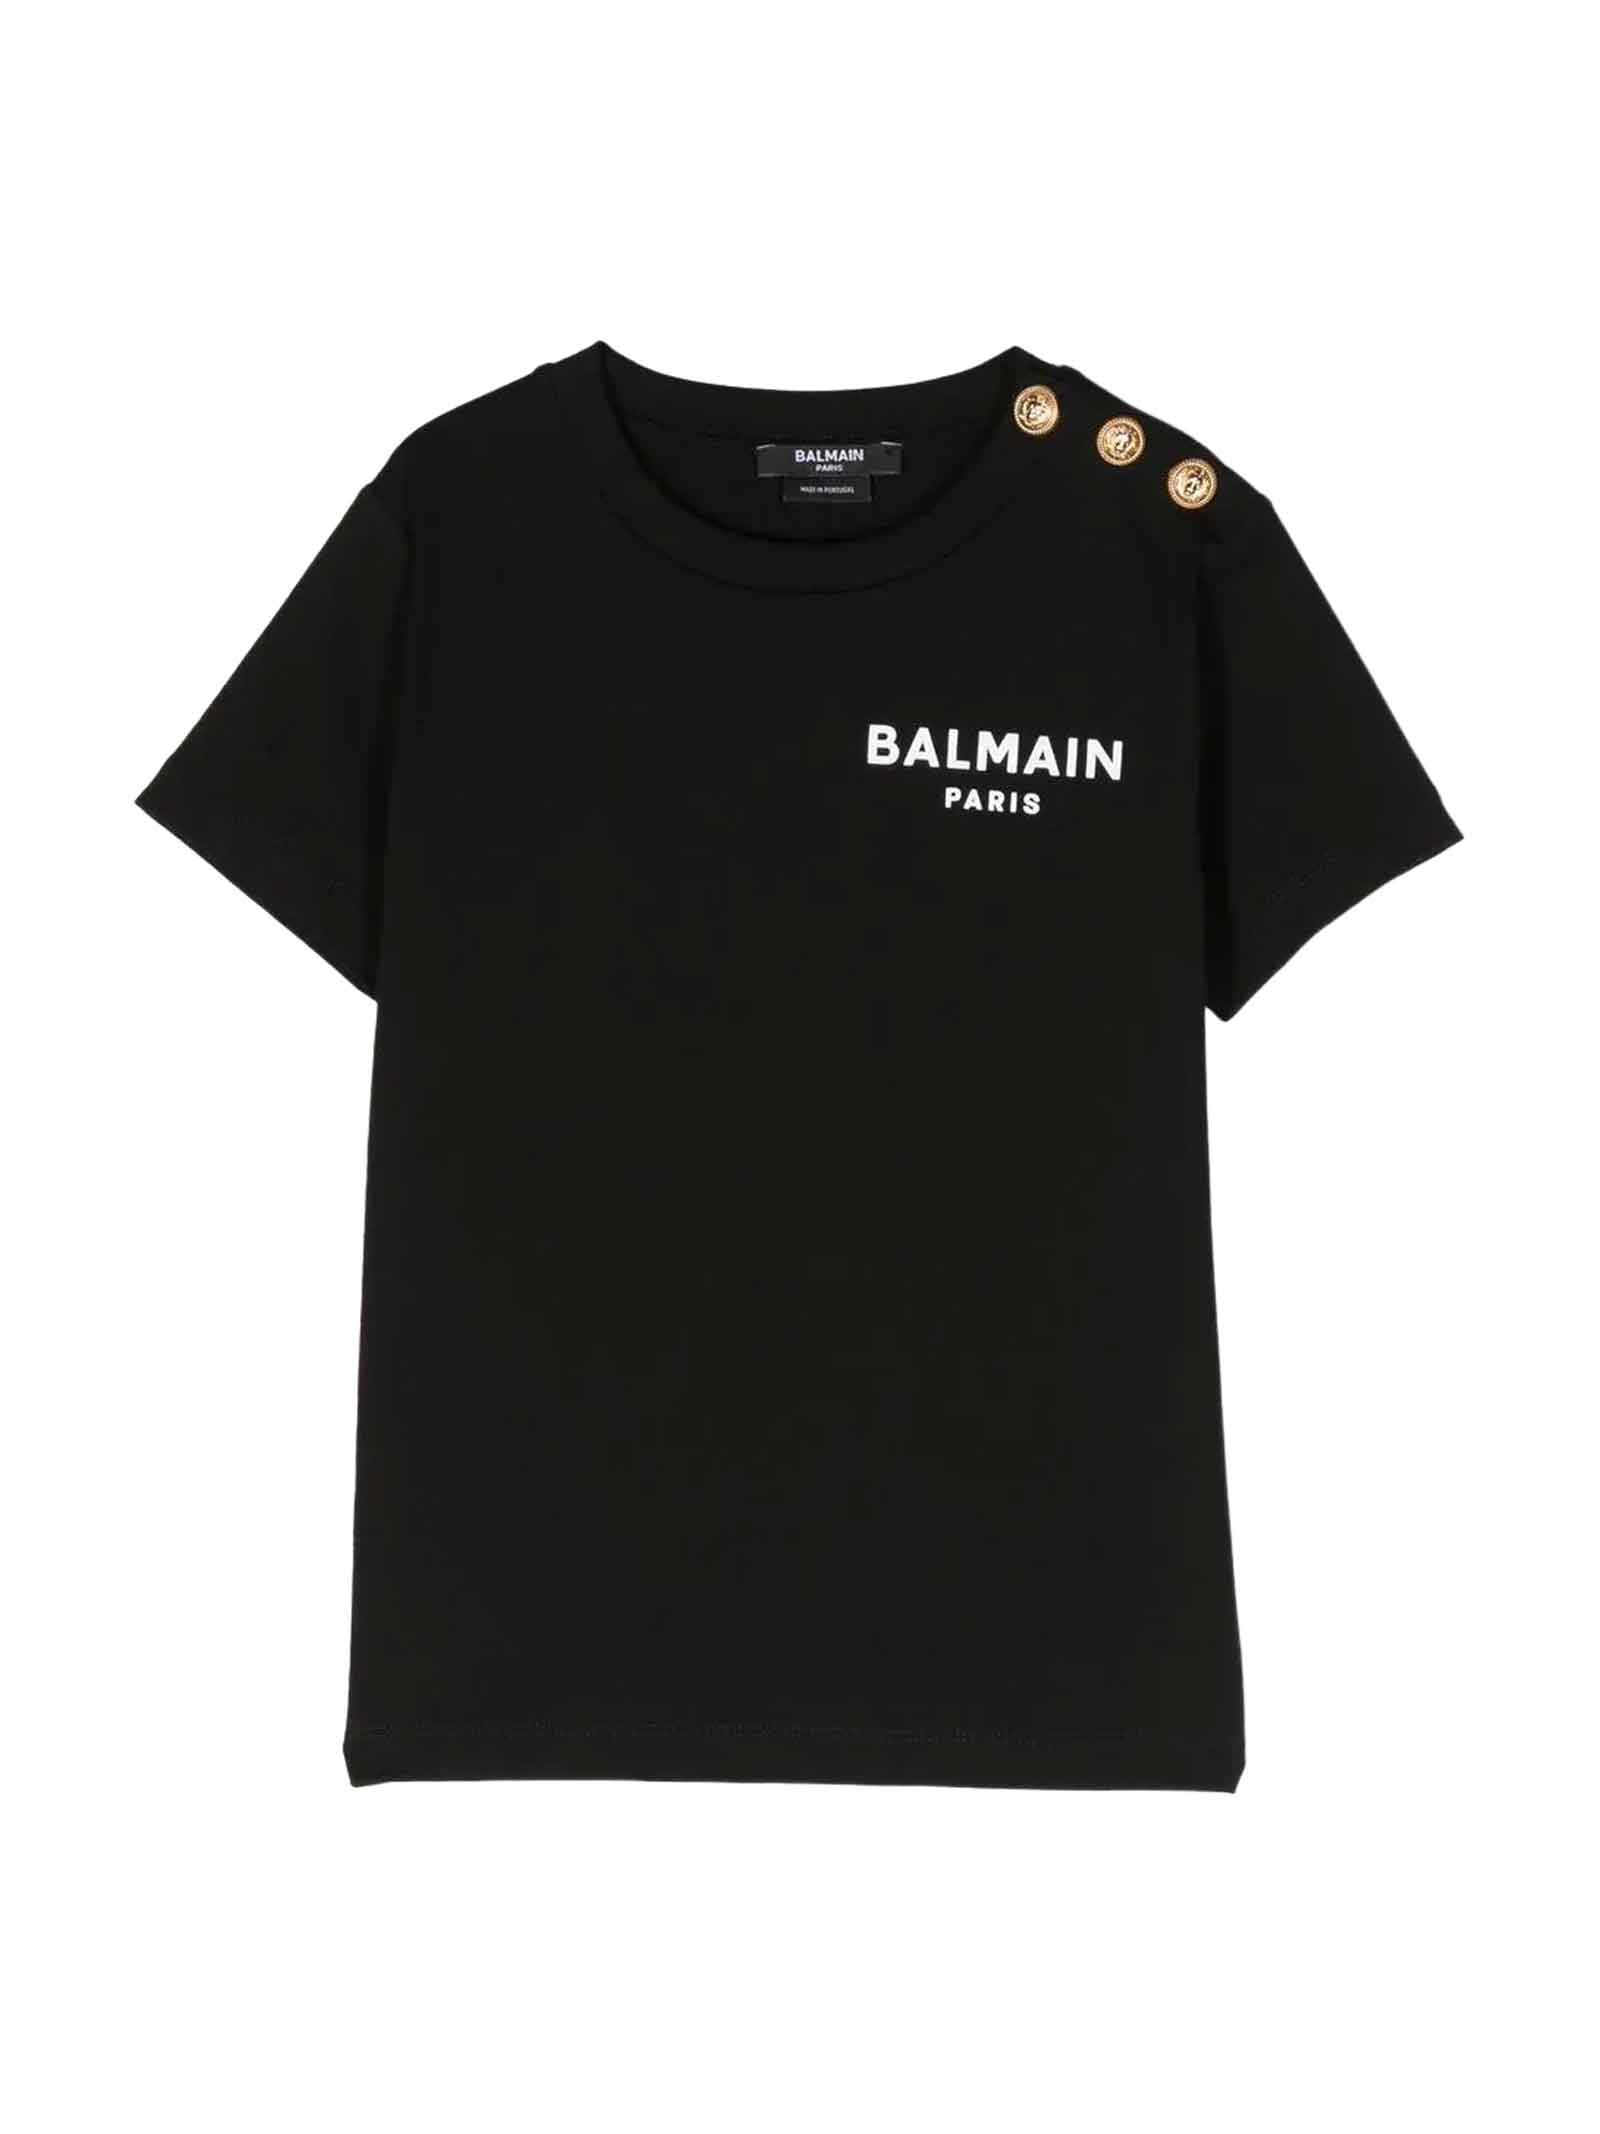 BALMAIN BLACK T-SHIRT UNISEX